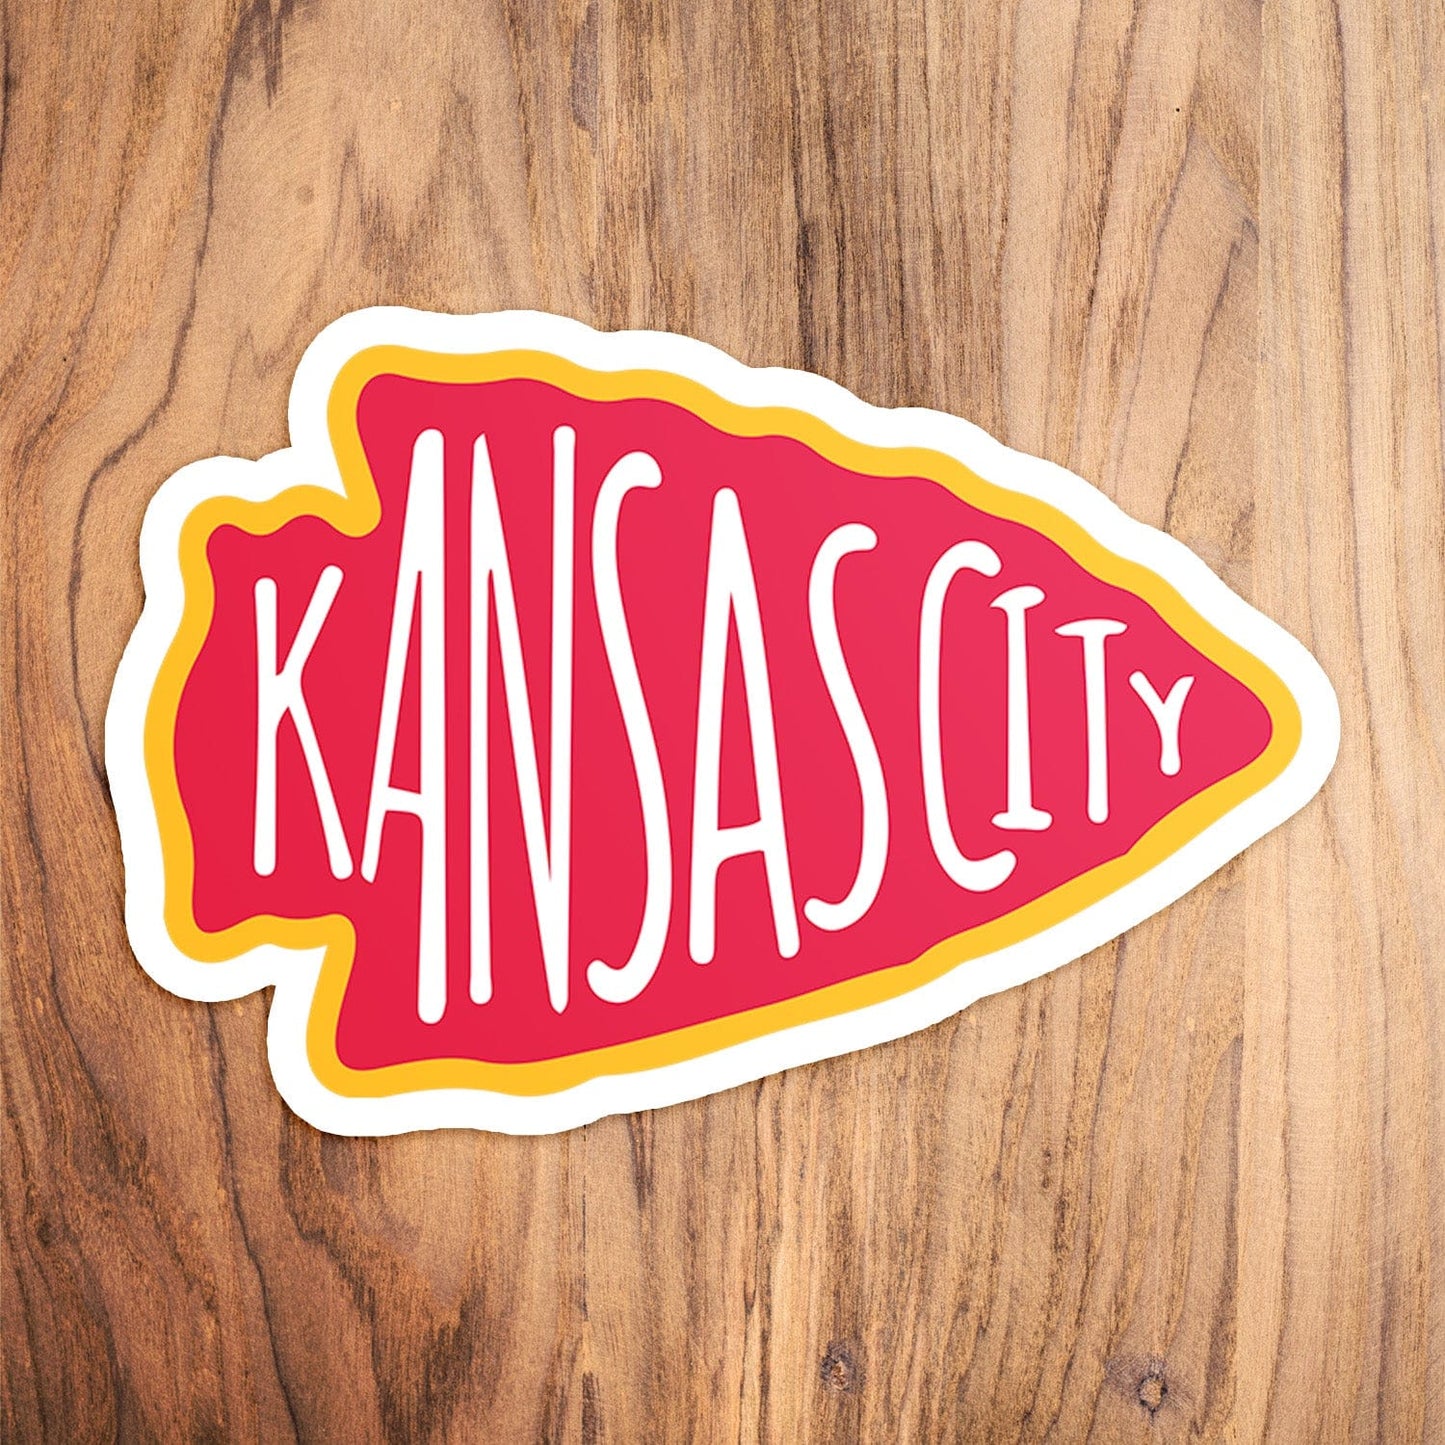 Chiefs Pennant - Kansas City Chiefs Vinyl Die-Cut Sticker